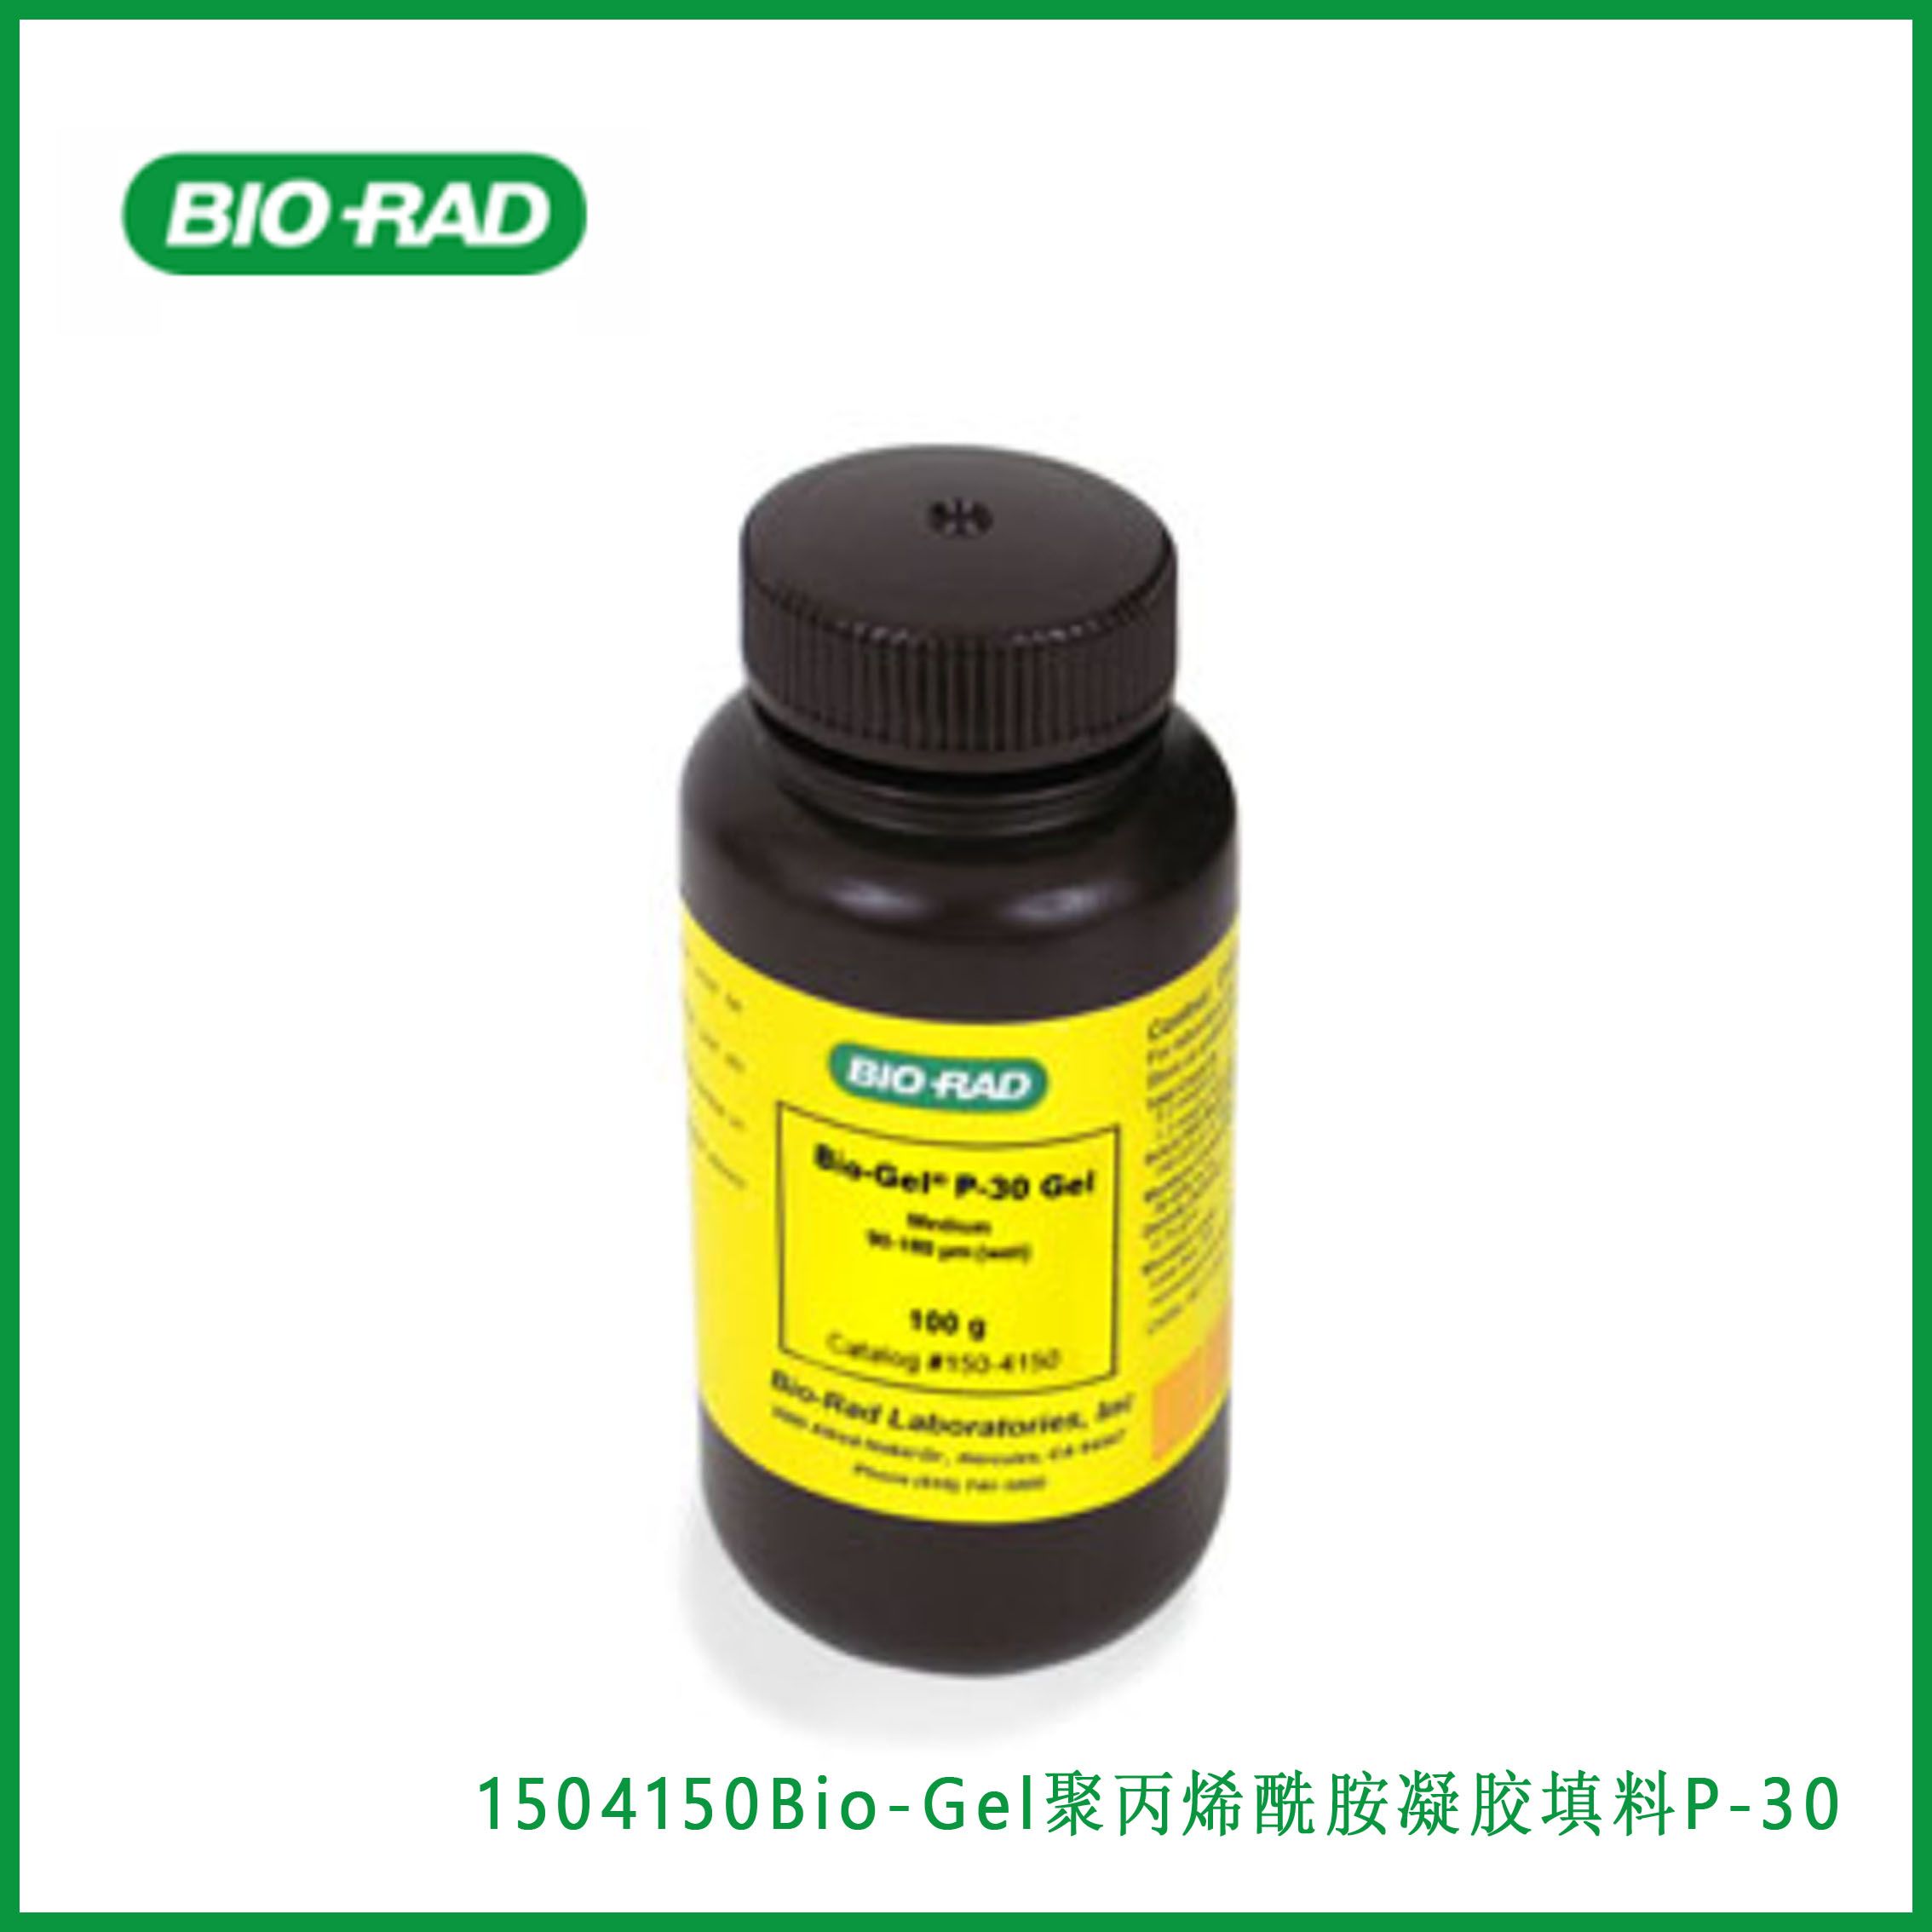 伯乐Bio-Rad1504150Bio-Gel P-30 Gel Bio-Gel 凝胶填料P-30 100 g，现货